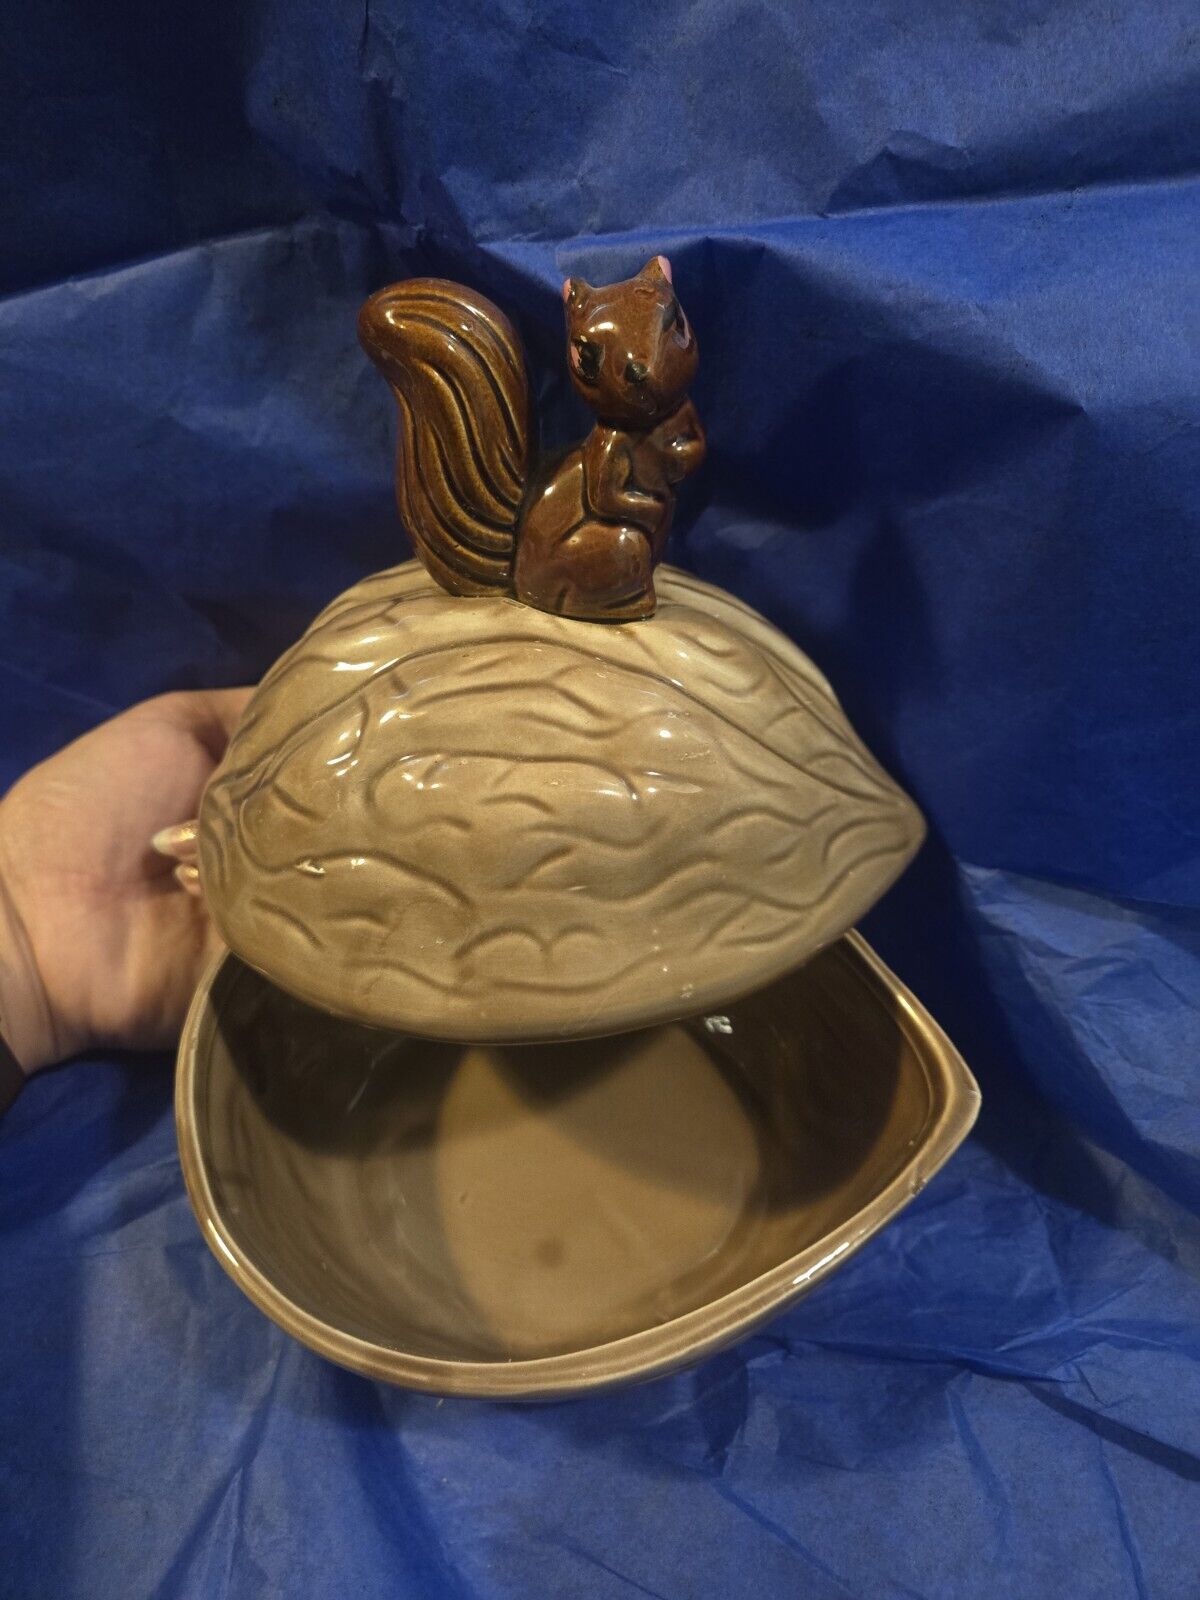 Vintage Ceramic Walnut with Squirrel on Top. Candy Dish, Trinket Box